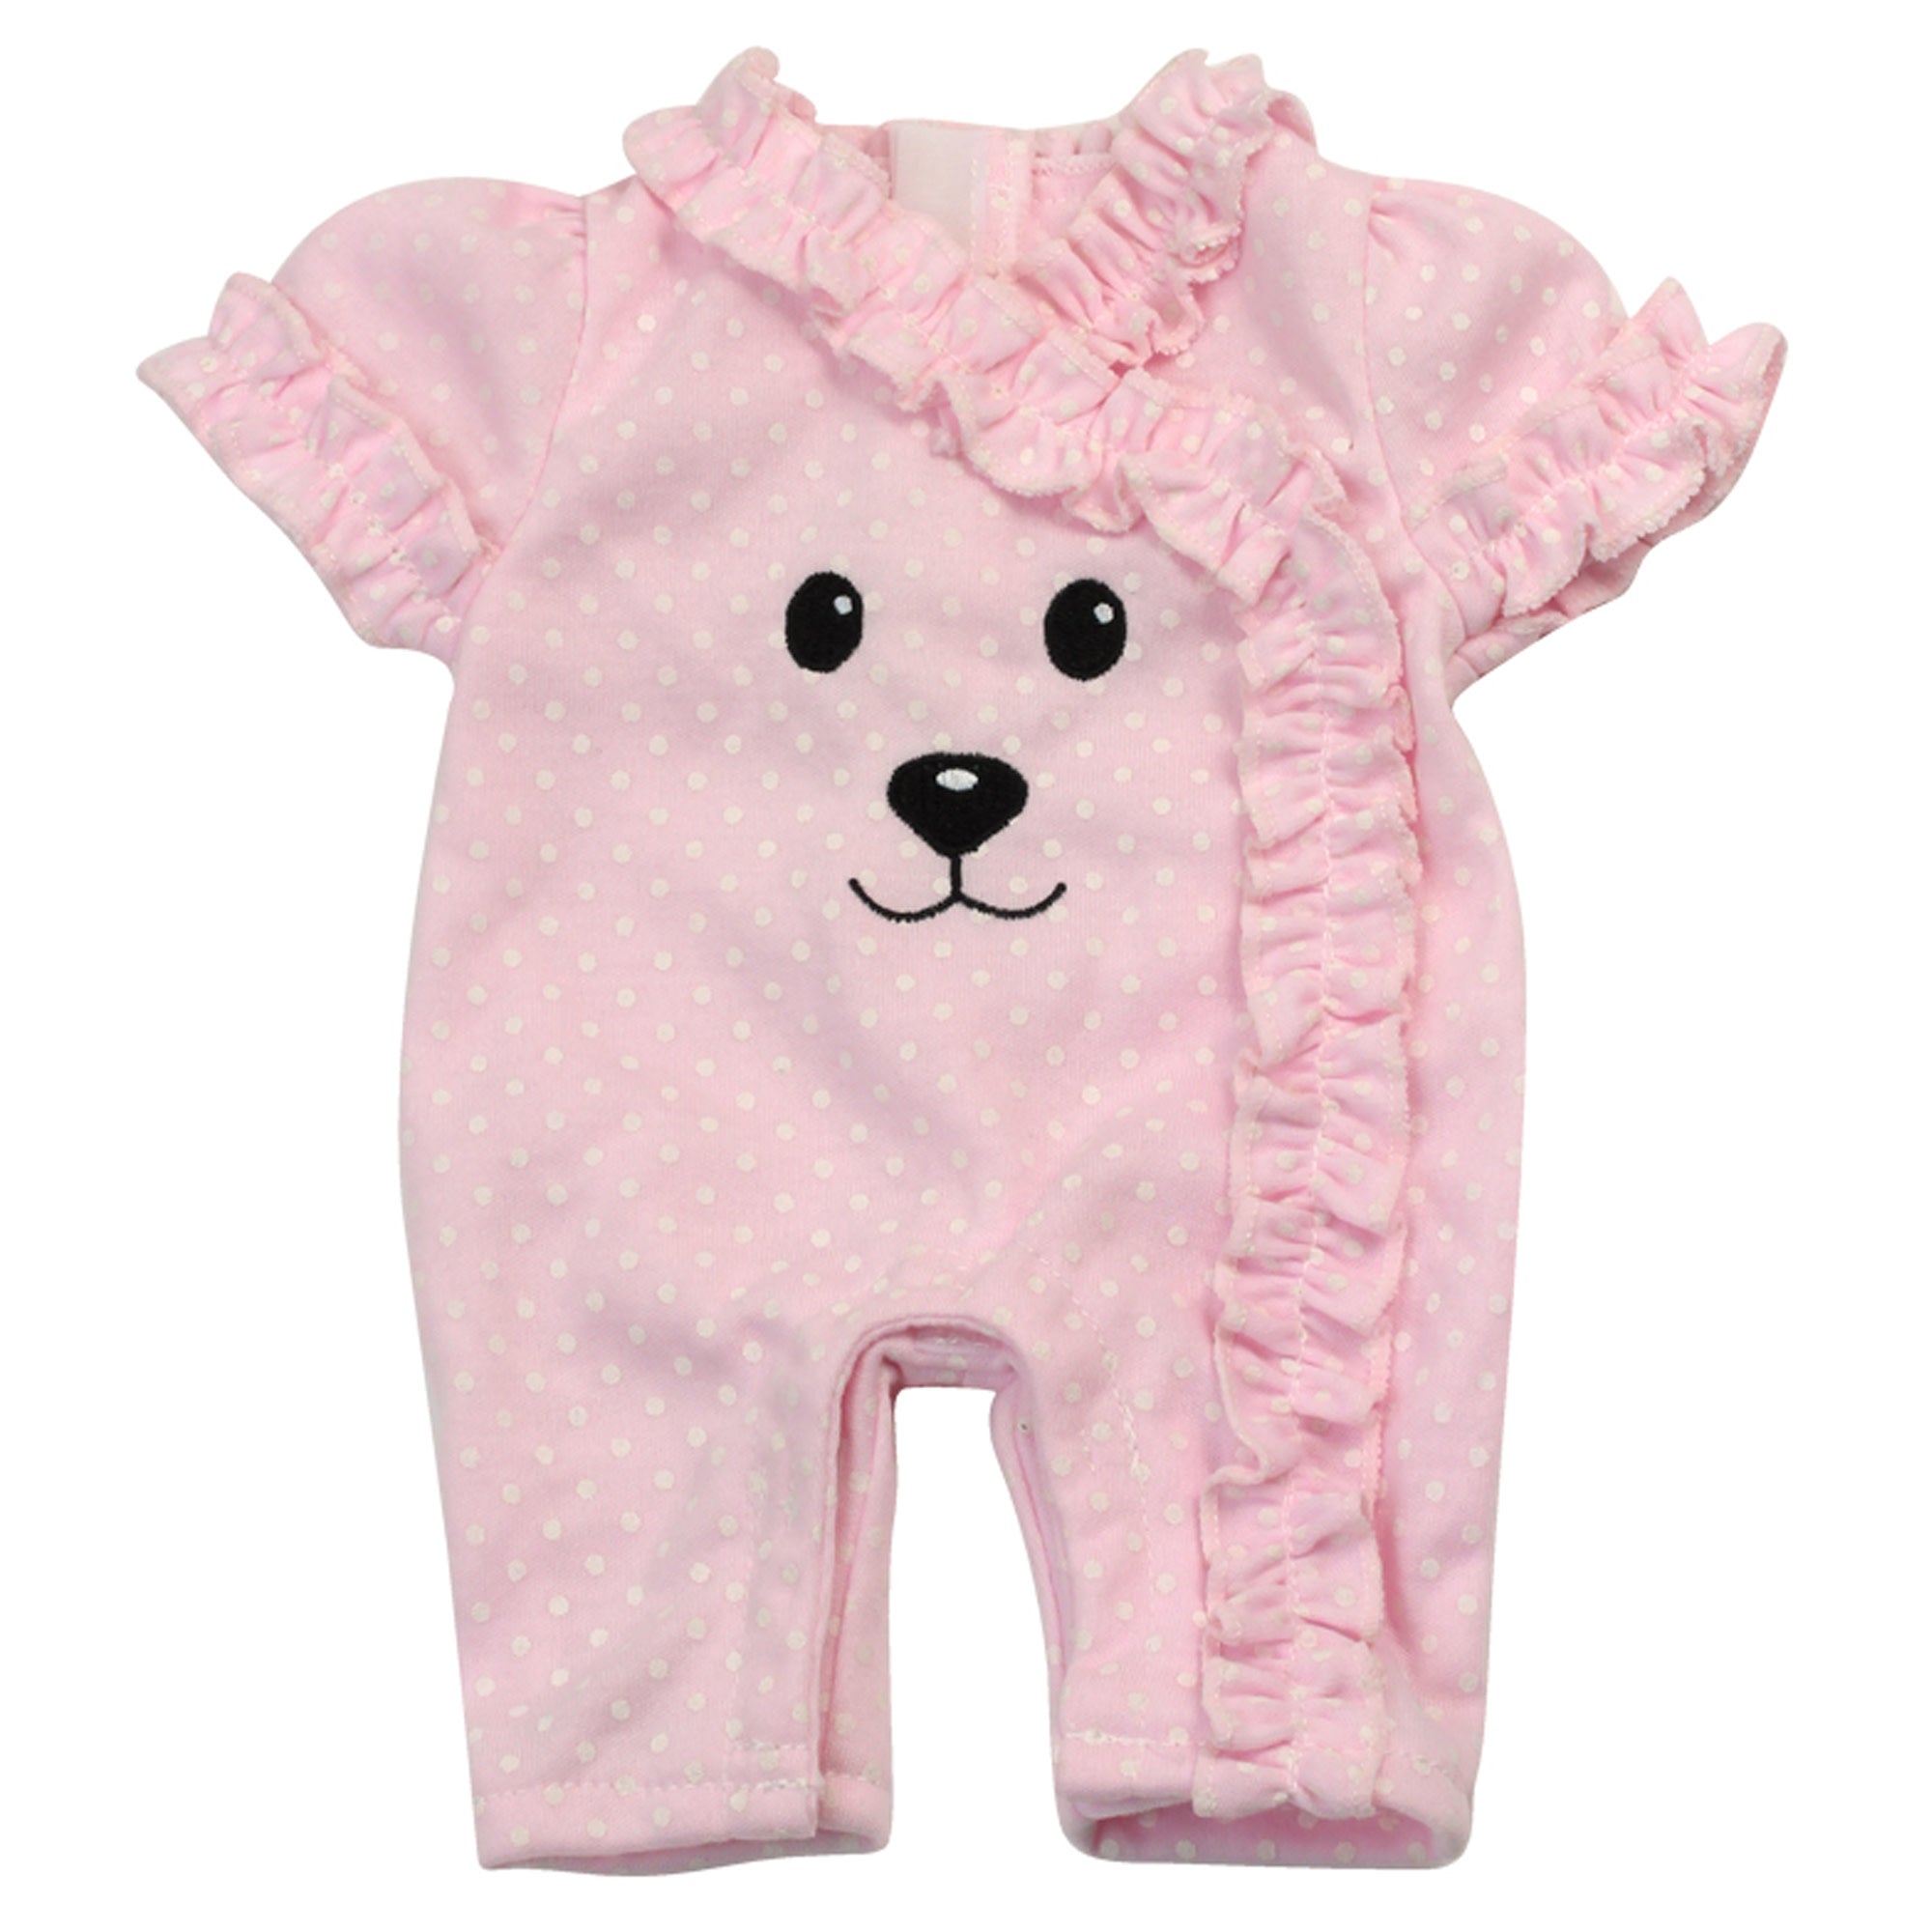 Sophia’s Polka Dot Teddy Bear Face Pajama Sleeper Outfit for 12” Baby Dolls, Light Pink